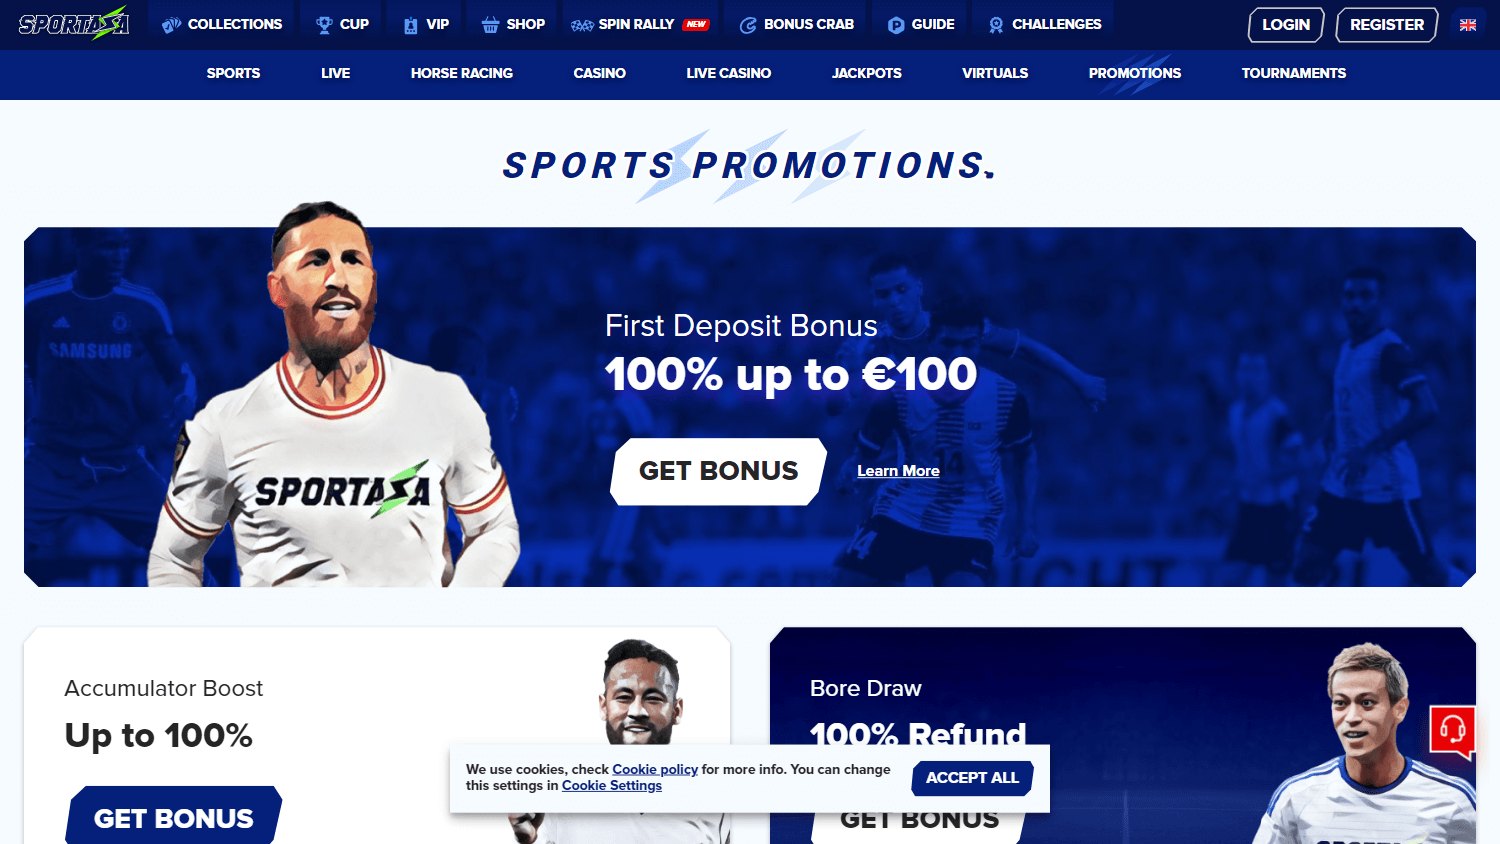 sportaza_casino_promotions_desktop